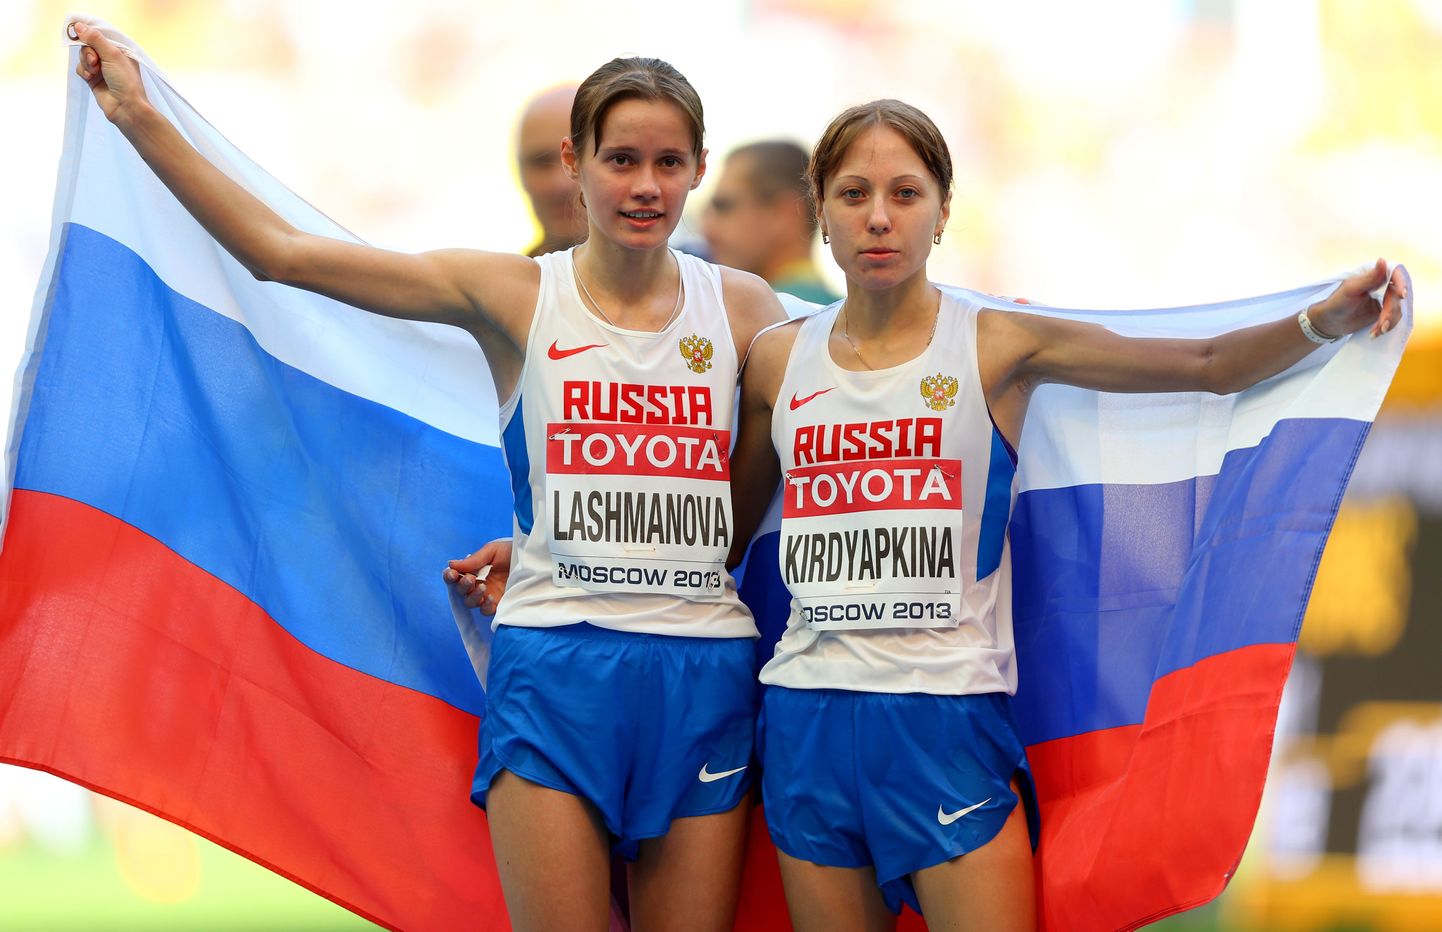 Елена Лашманова (слева) и Анися Кирдяпкина после окончания финального забега.